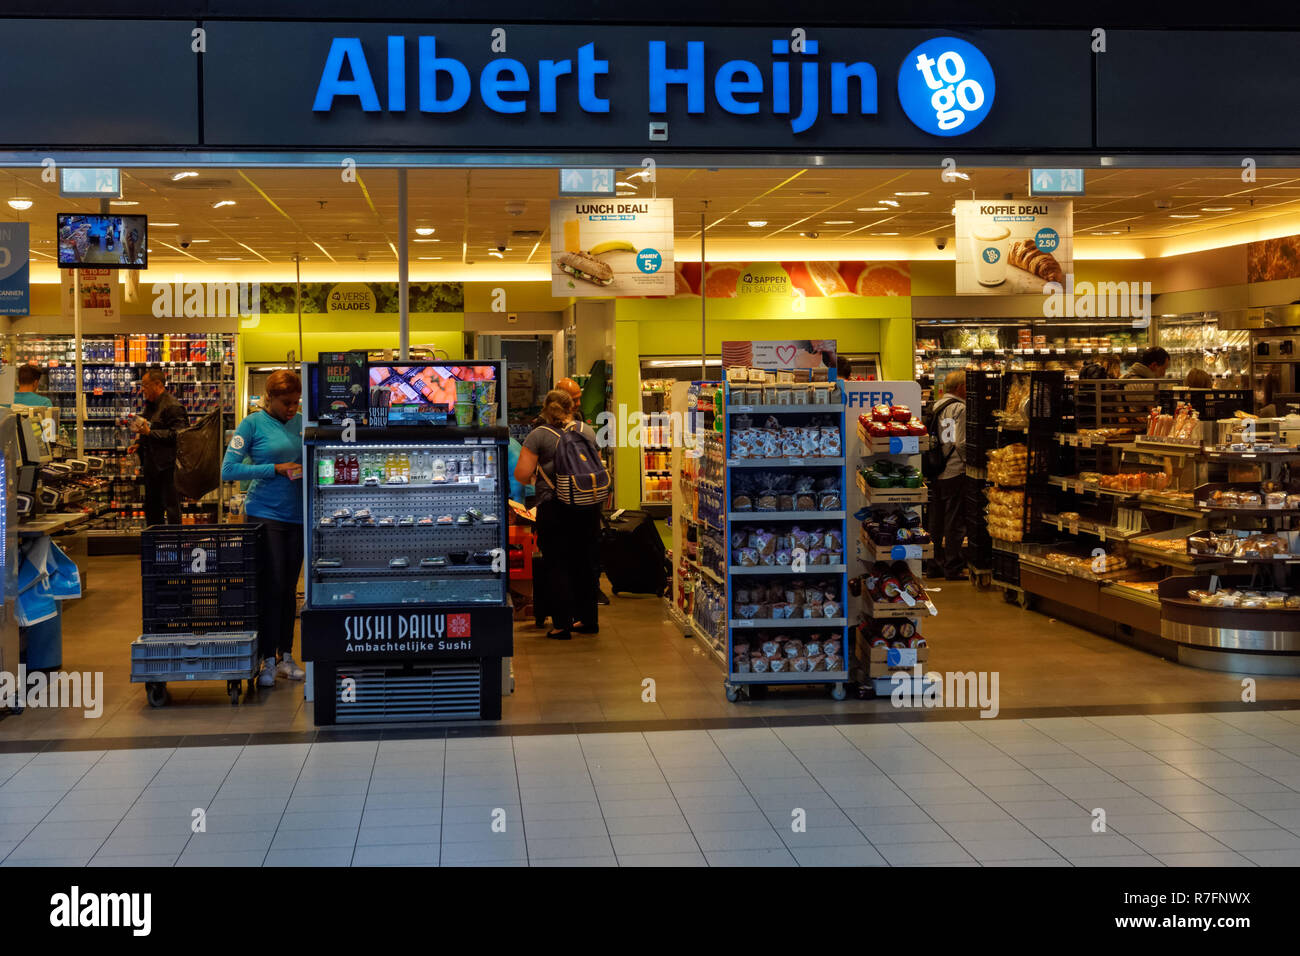 Albert Heijn store, Amsterdam, Netherlands Stock Photo